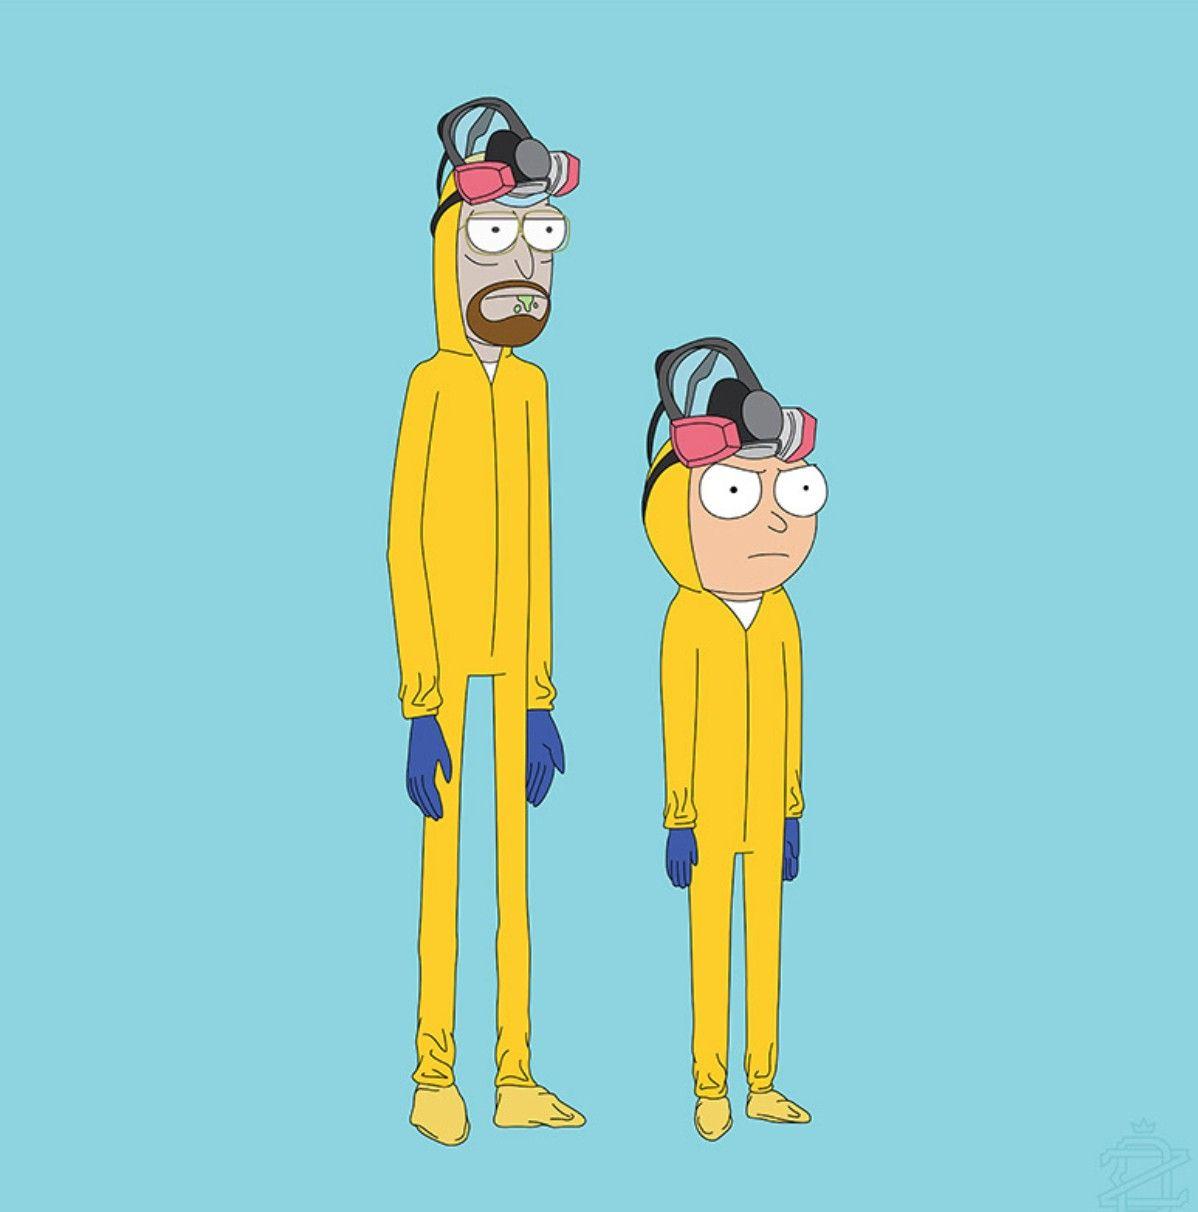 Any Rick and Morty fans? Haha: breakingbad HD wallpaper